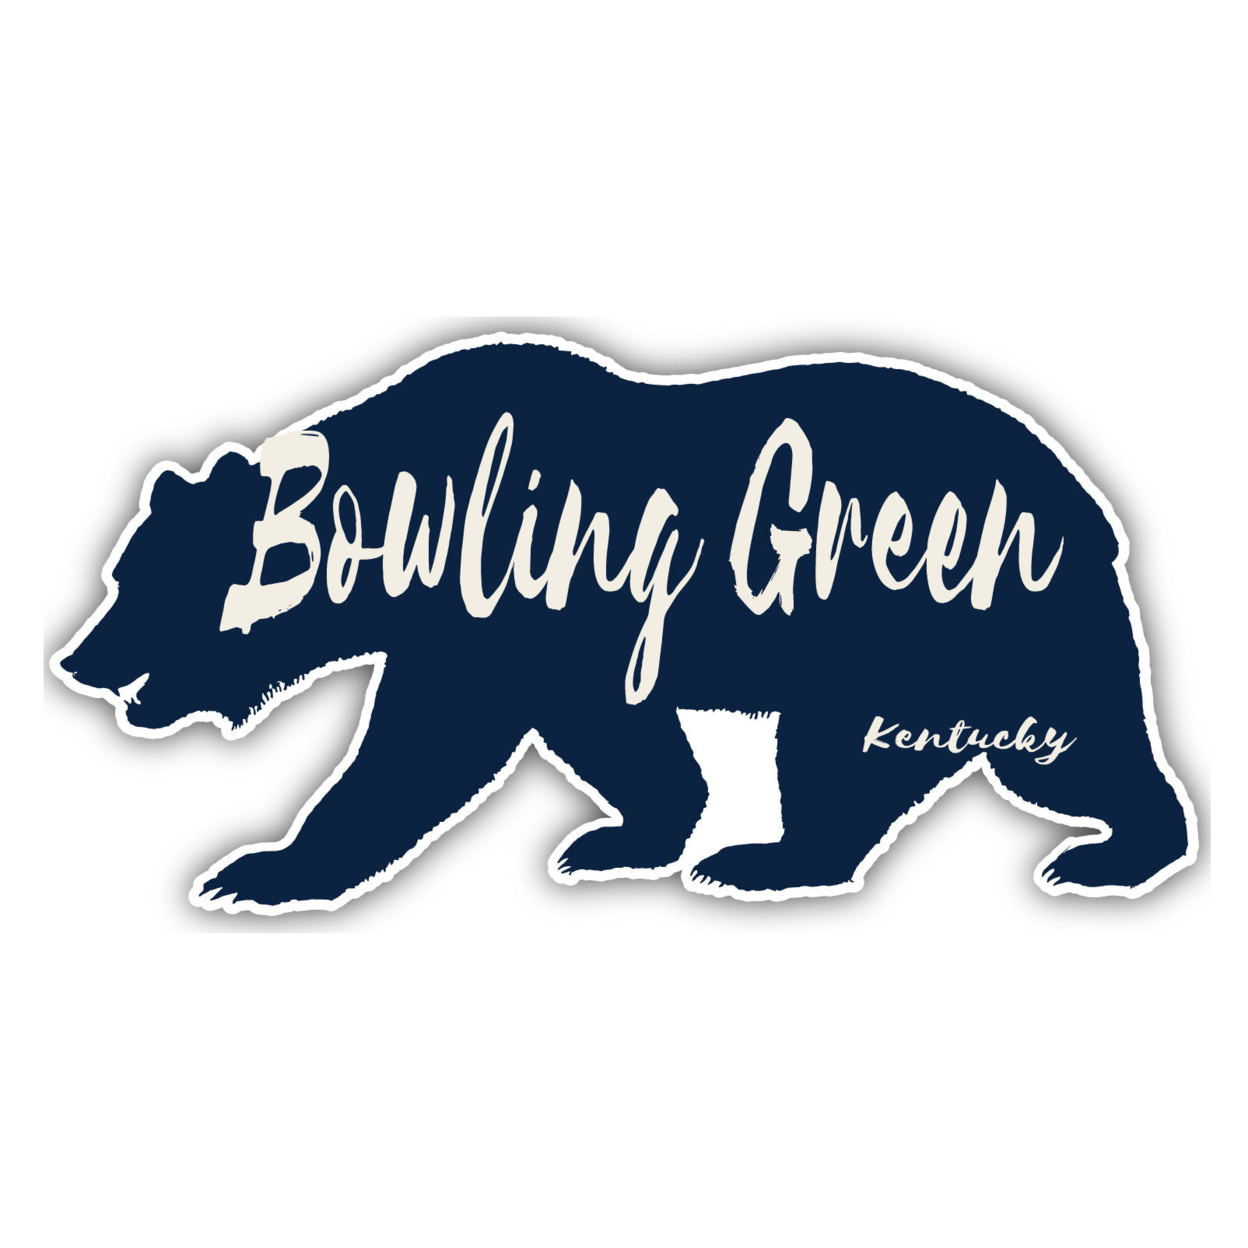 Bowling Green Kentucky Souvenir Decorative Stickers (Choose Theme And Size) - Single Unit, 6-Inch, Bear